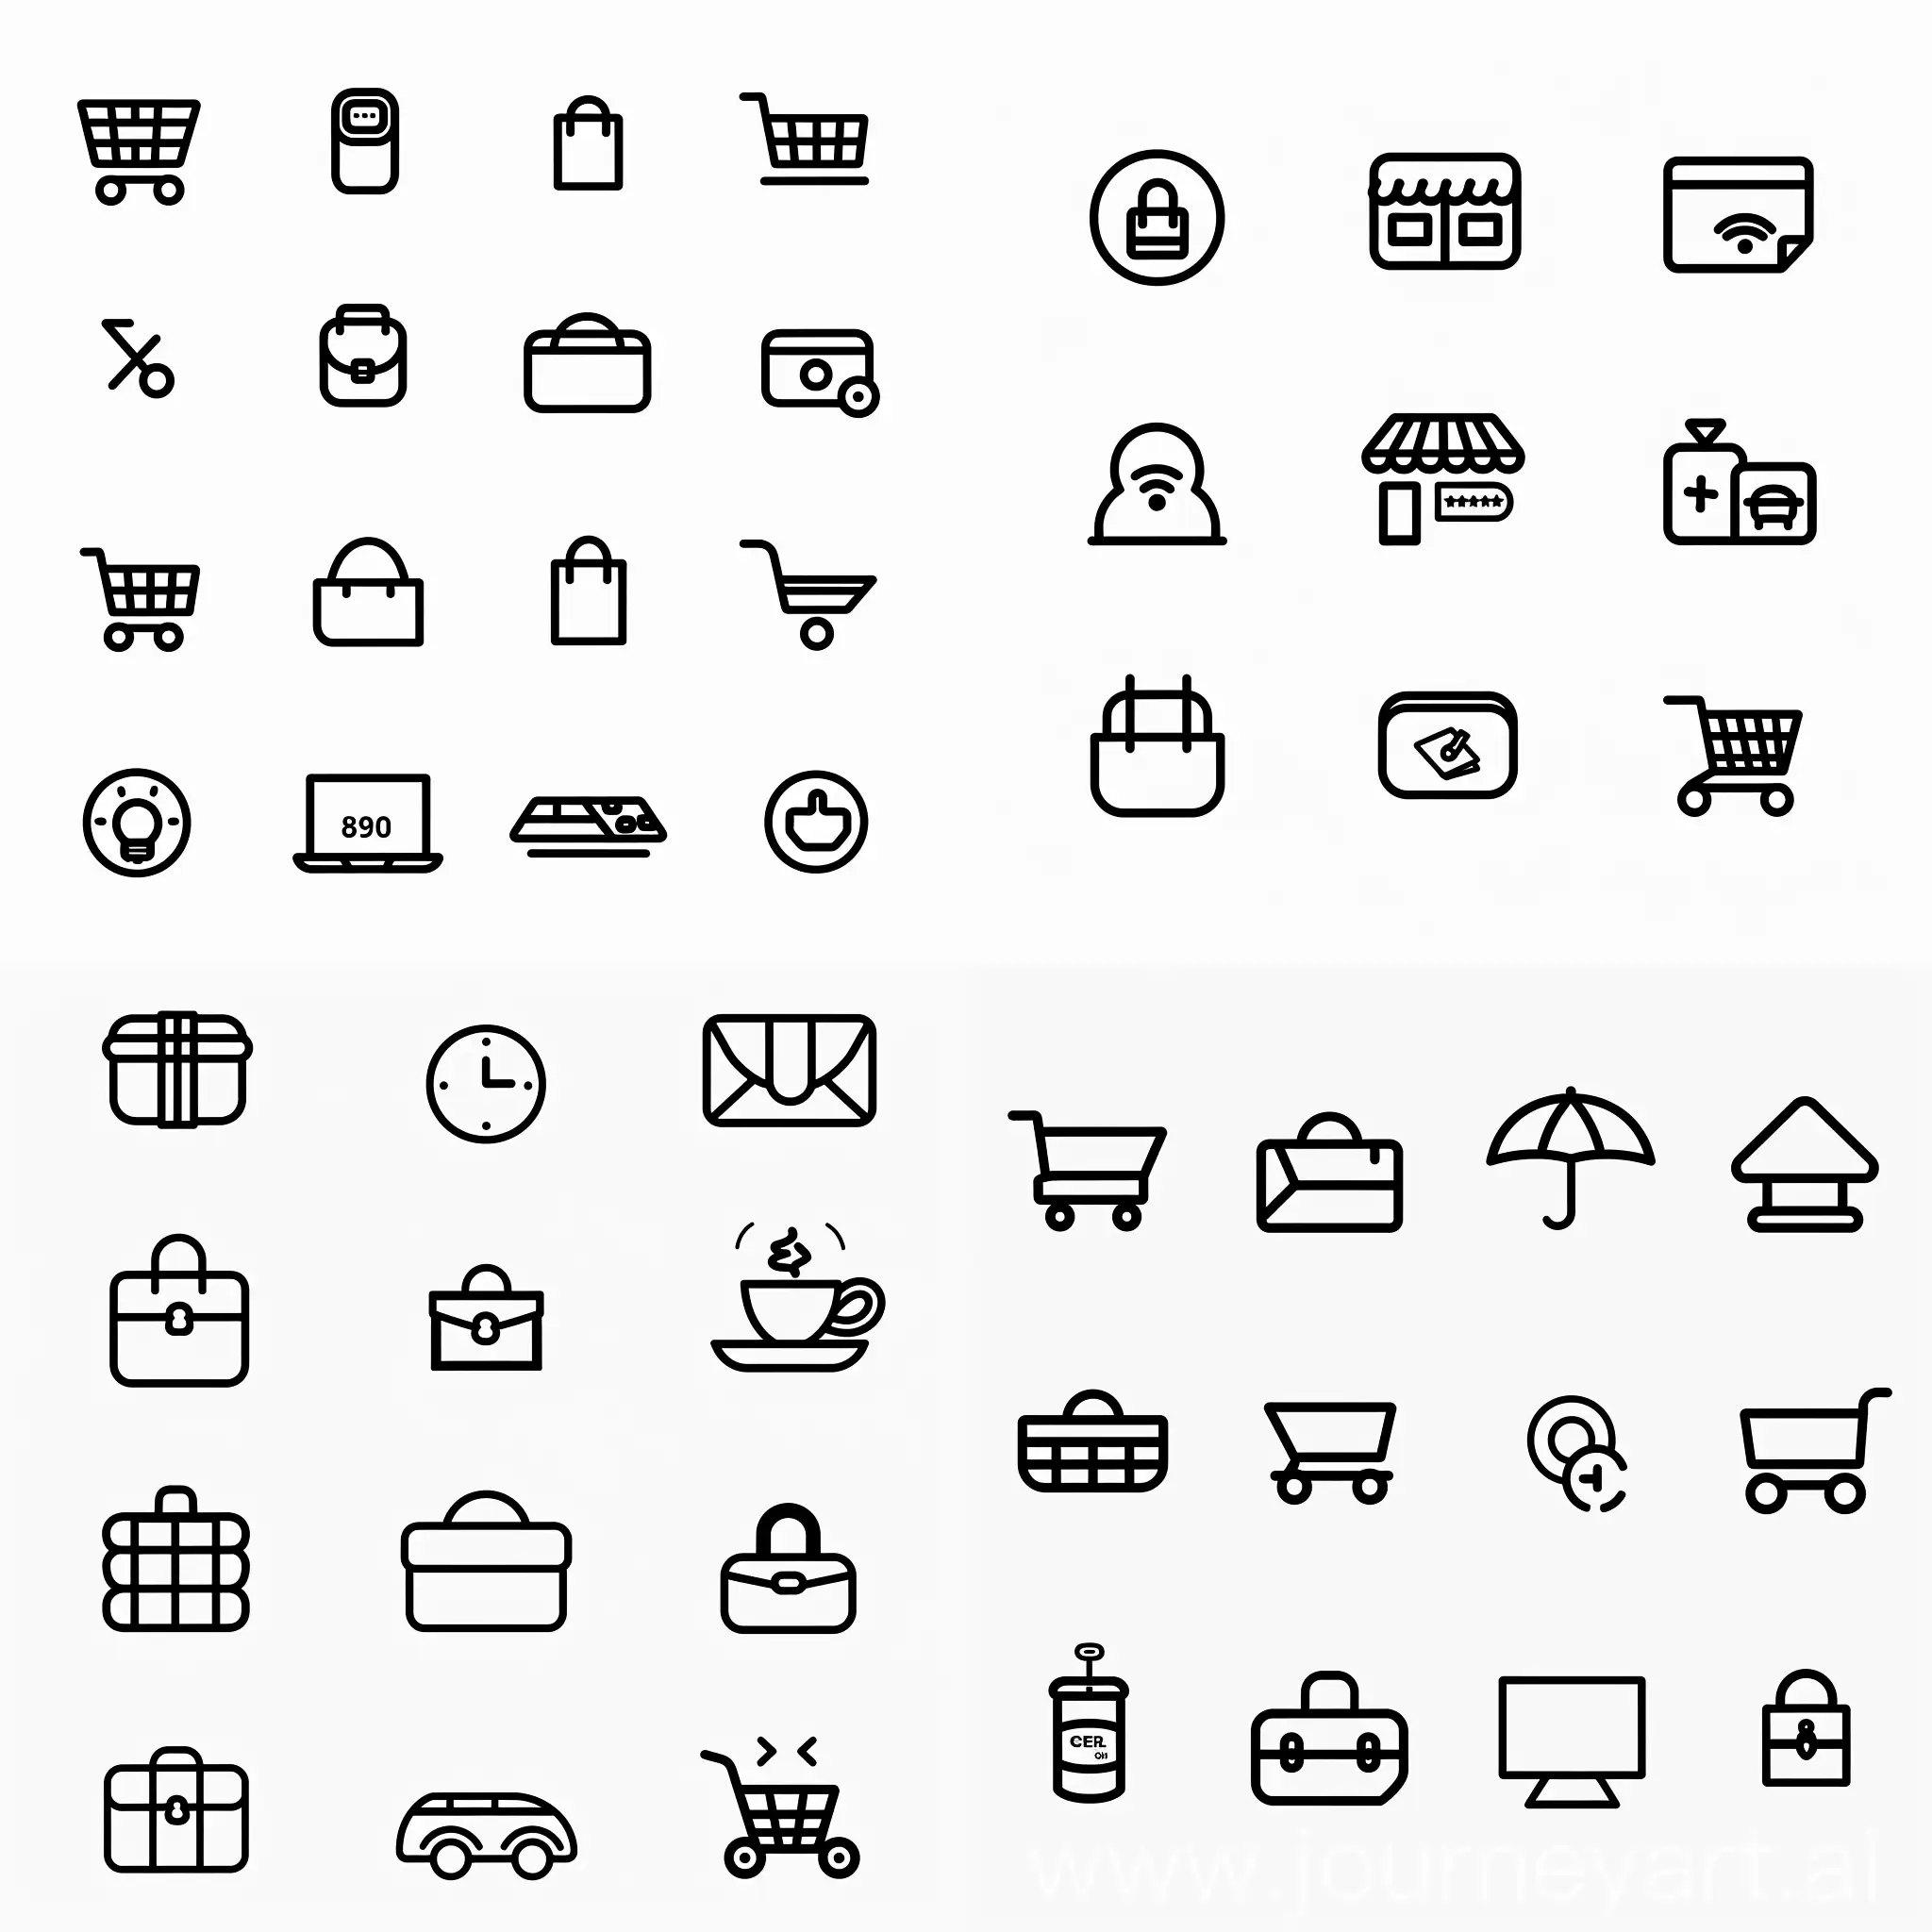 Modern-Line-Icons-for-Simple-UI-Web-Shop-Design